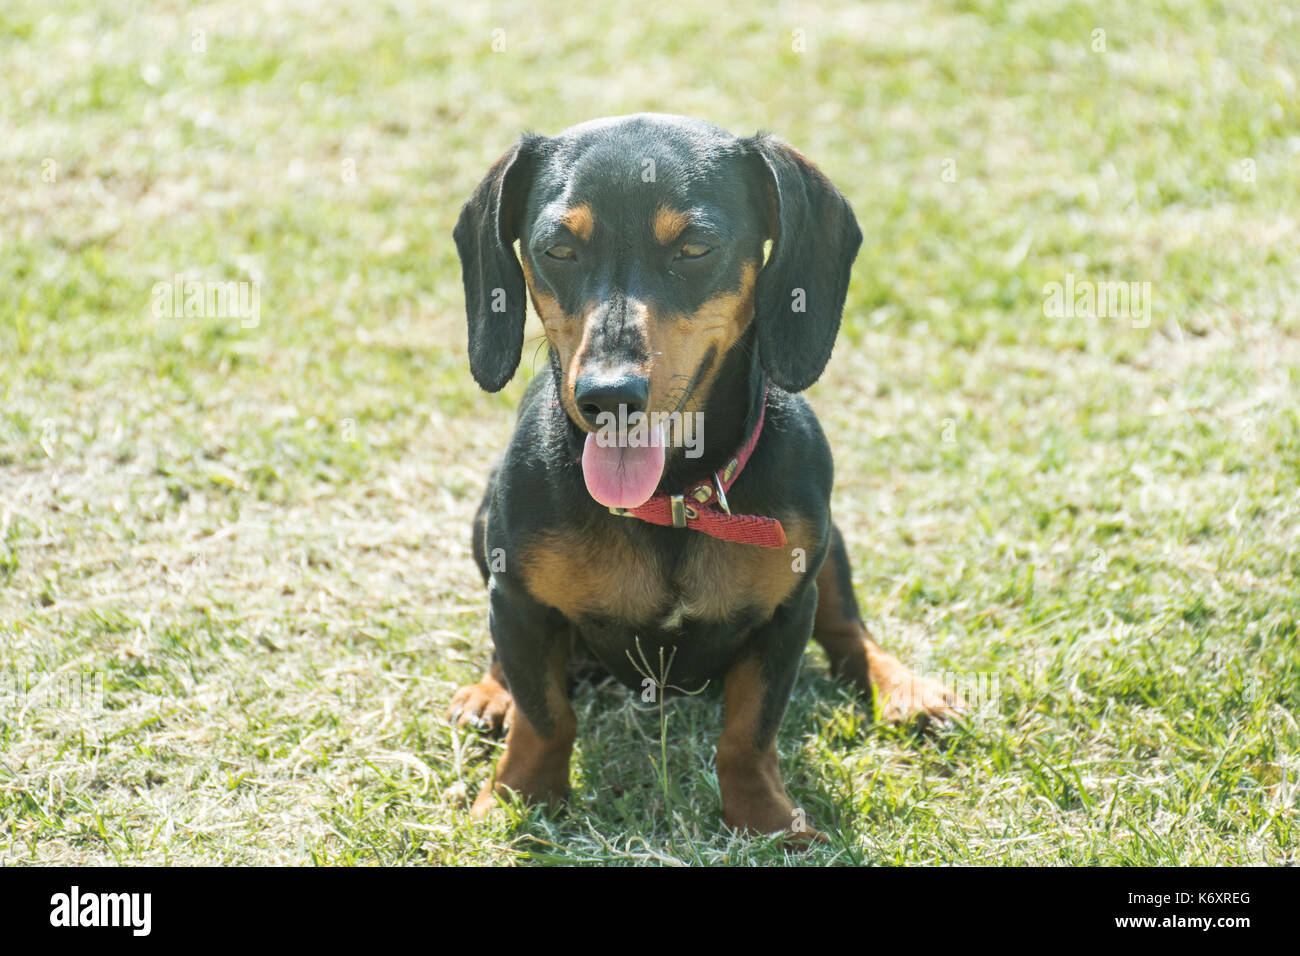 Black short-haired dachshund dog sitting on the grass Stock Photo